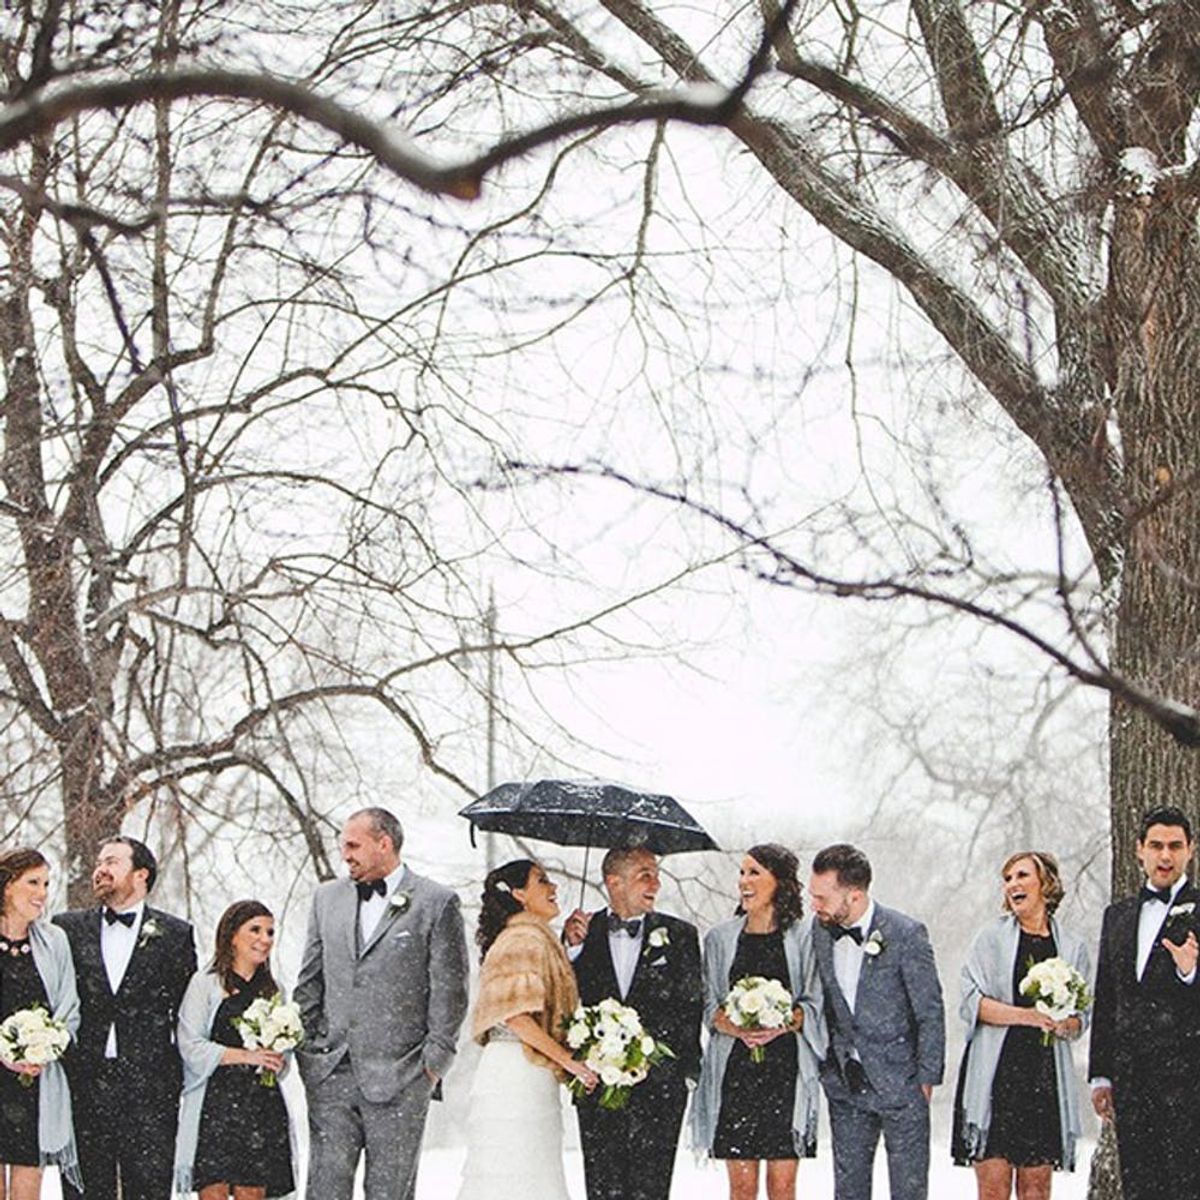 13 Amazing Snowy Photo Ideas for Your Winter Wedding